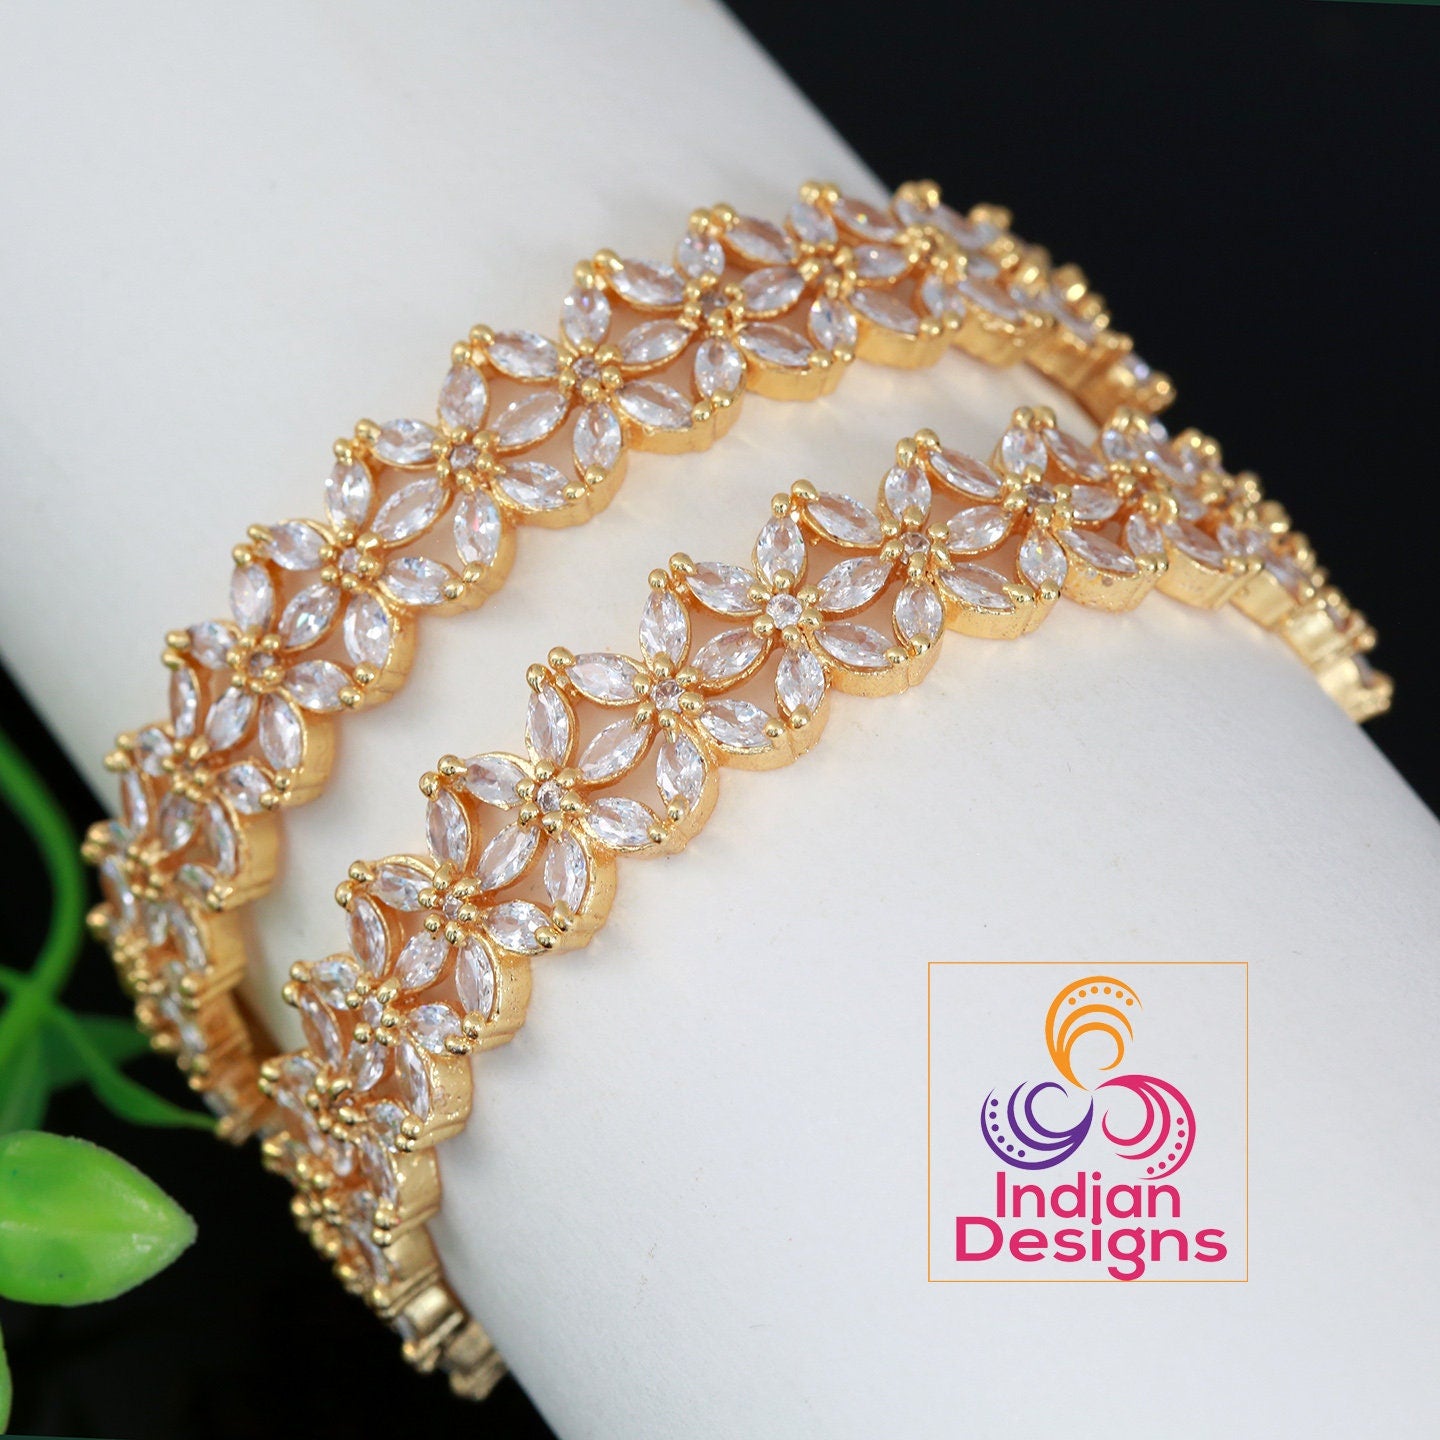 American diamond Gold Plated floral crystal bangles |CZ Stone AD Dimond bangle bracelet|Latest one gram gold Wedding bridal bangles set of 2